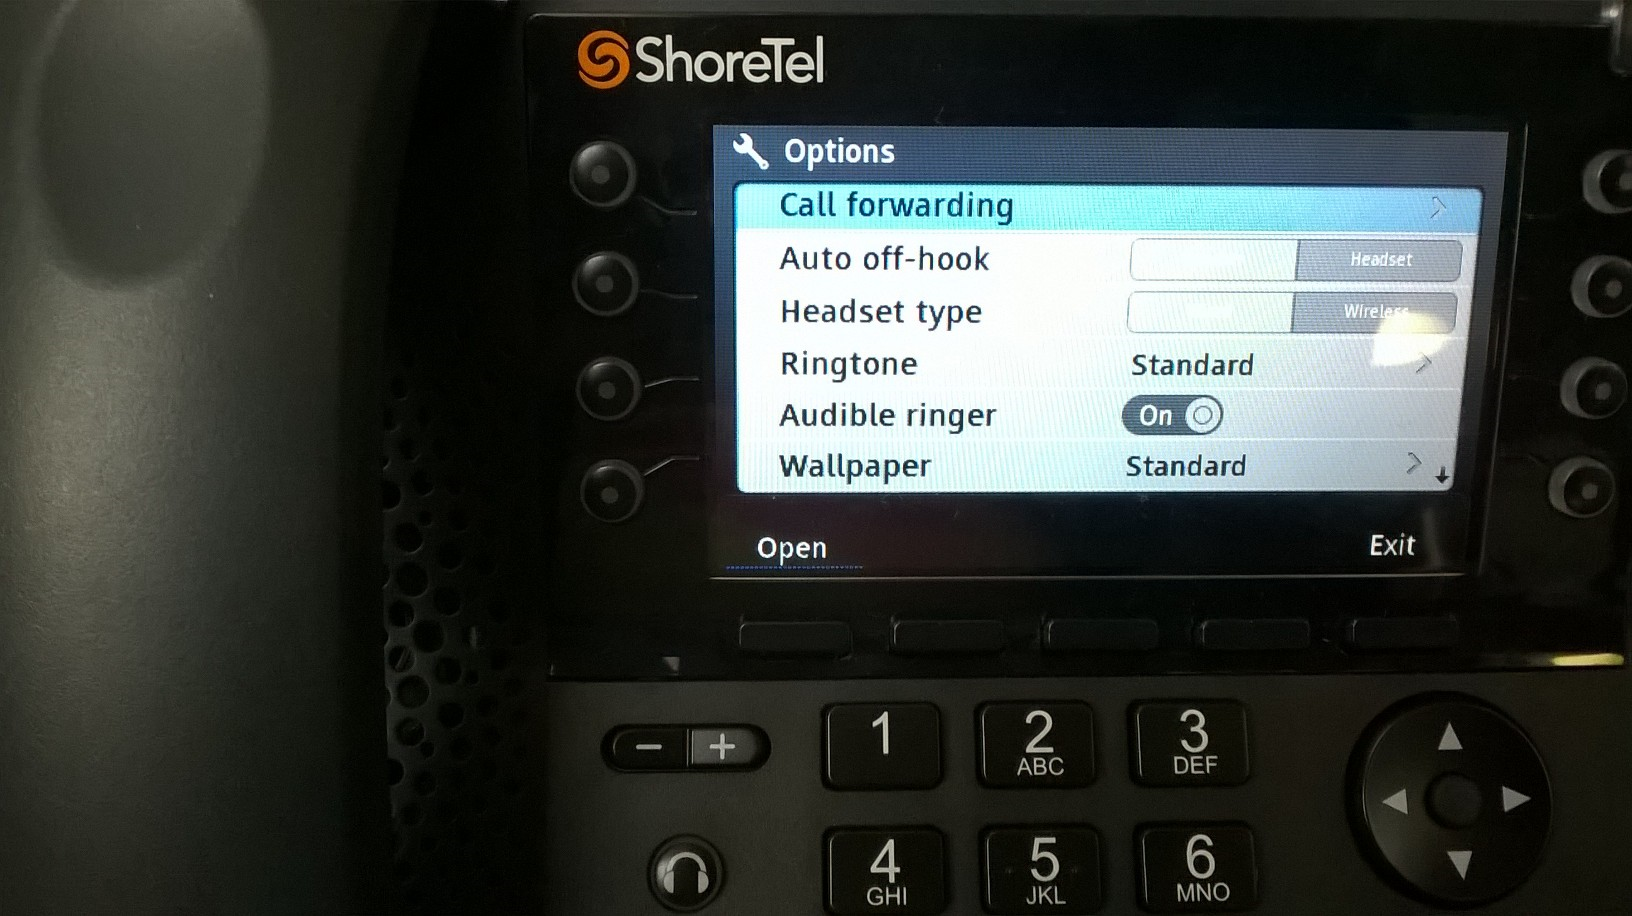 Shoretel phone auto off-hook headset setting